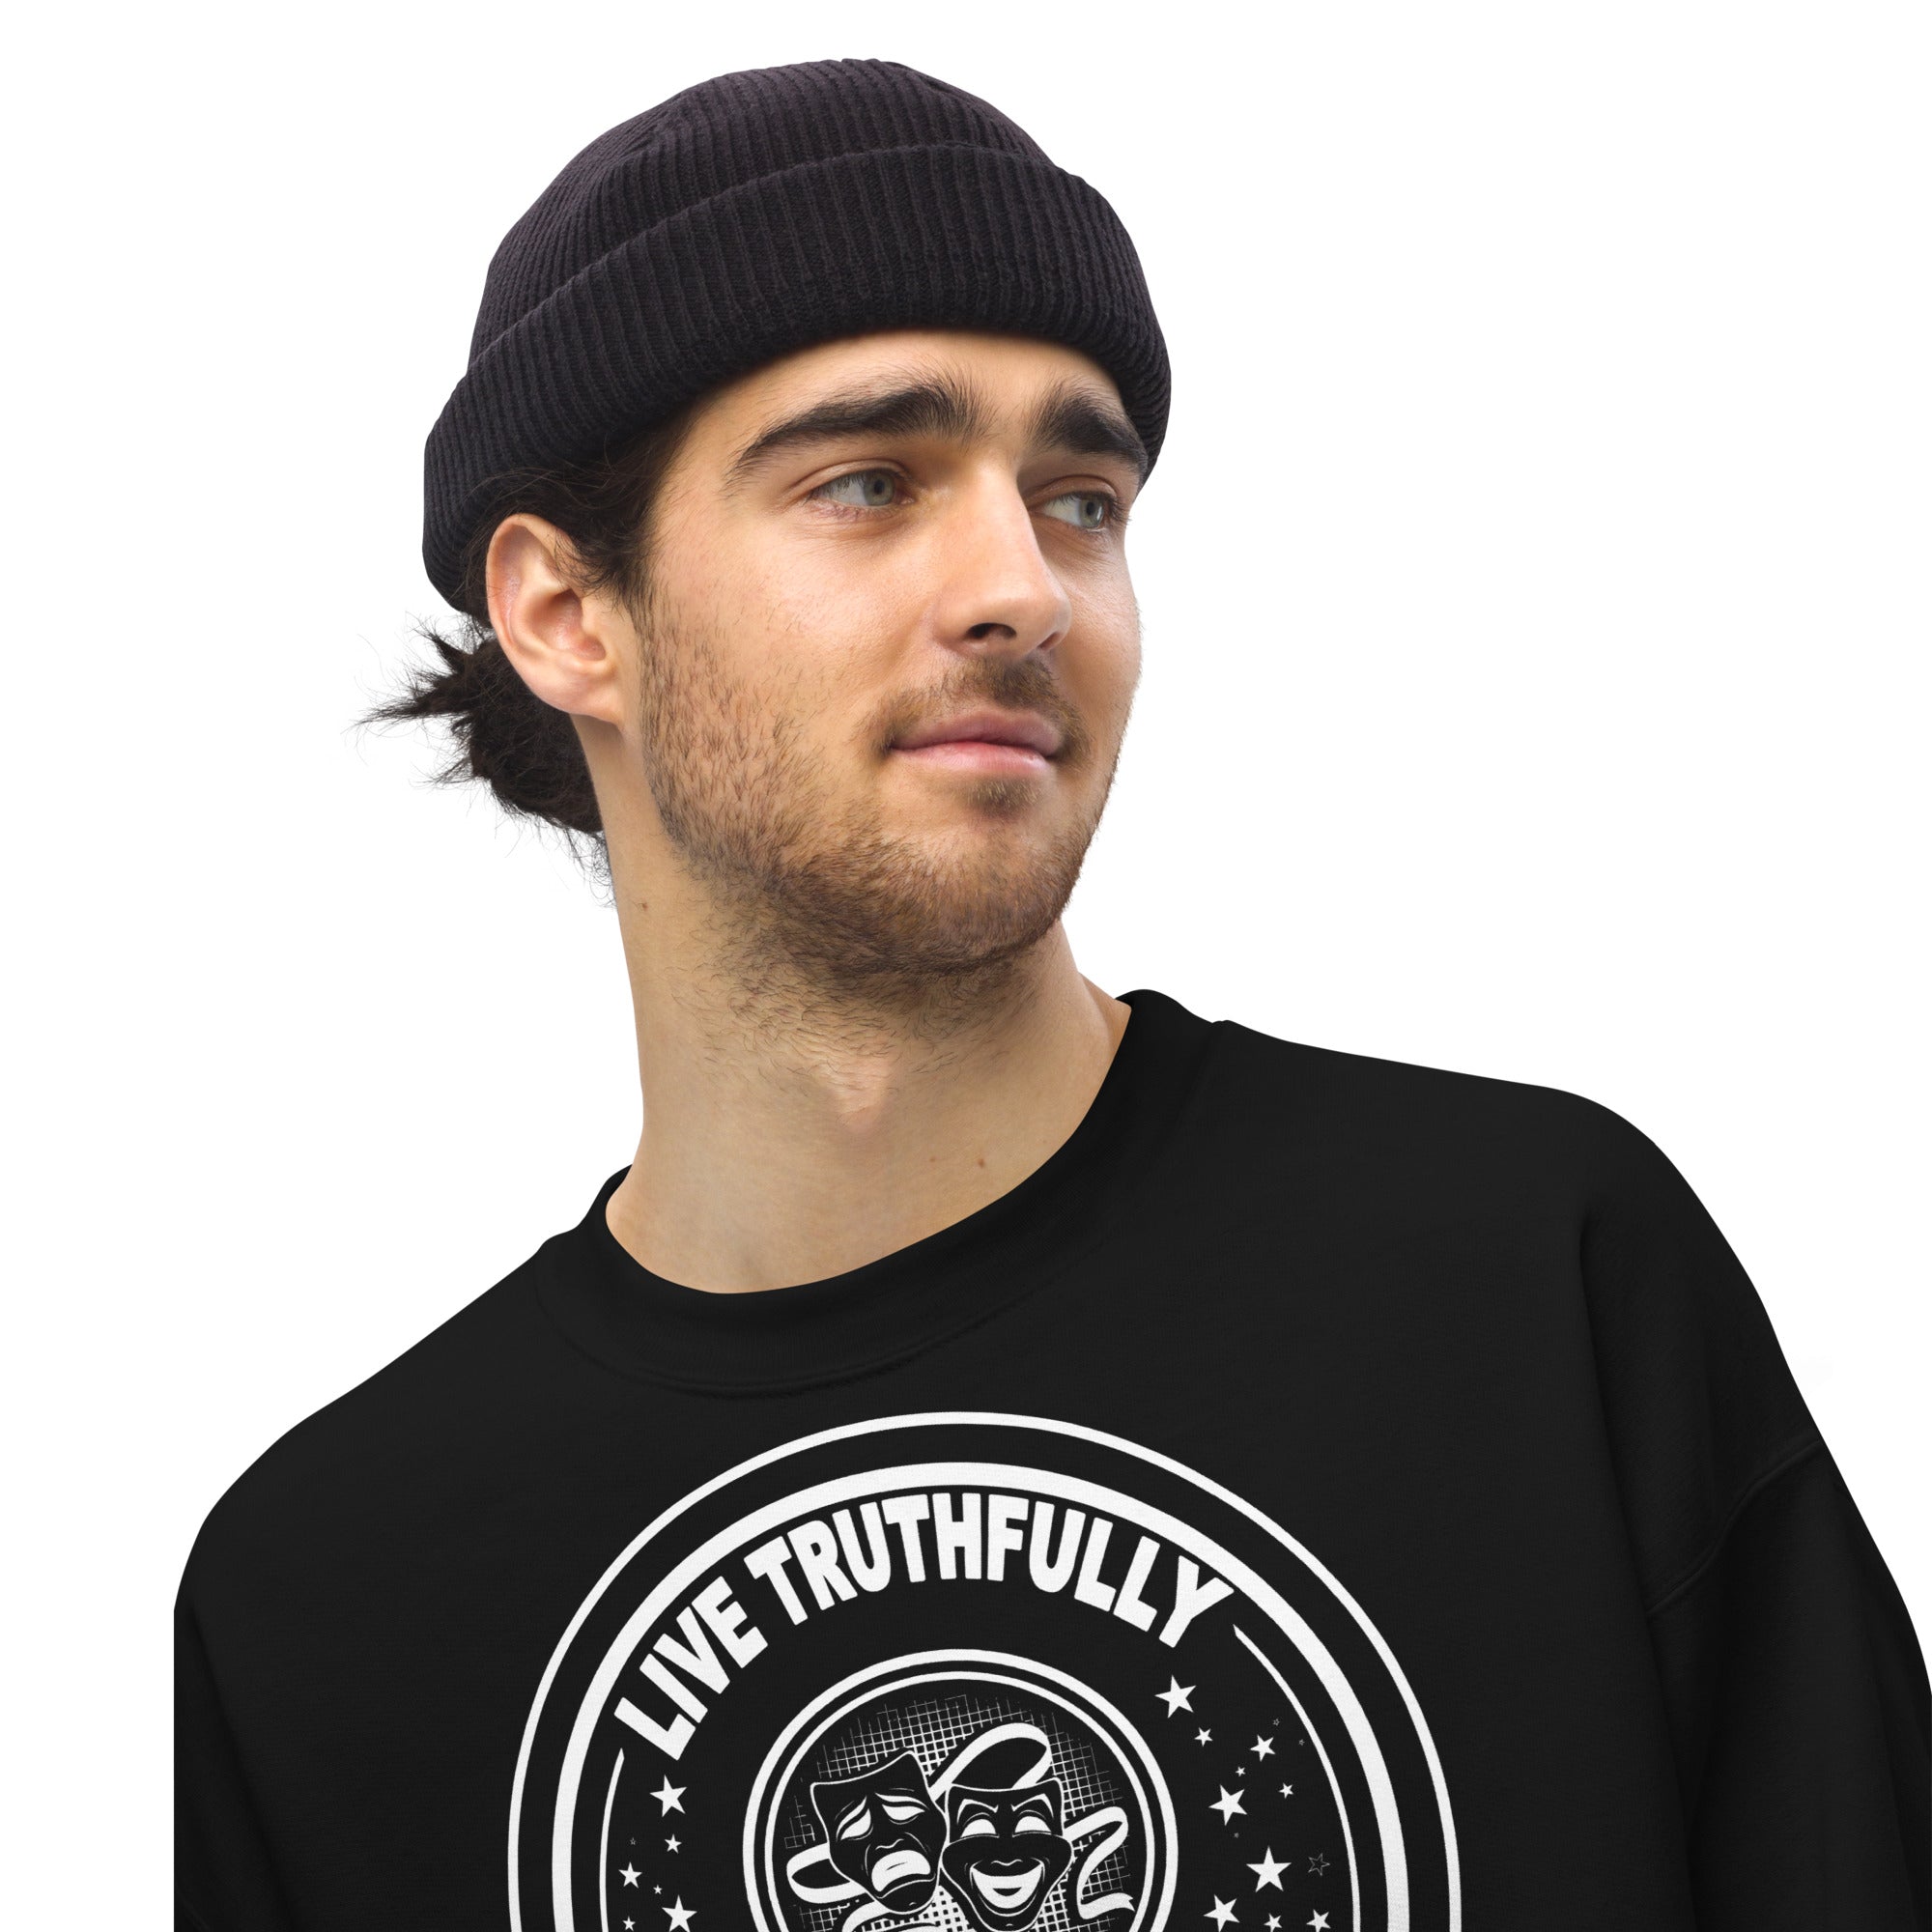 Live Truthfully - Printed Staple Unisex Crewneck Sweatshirt